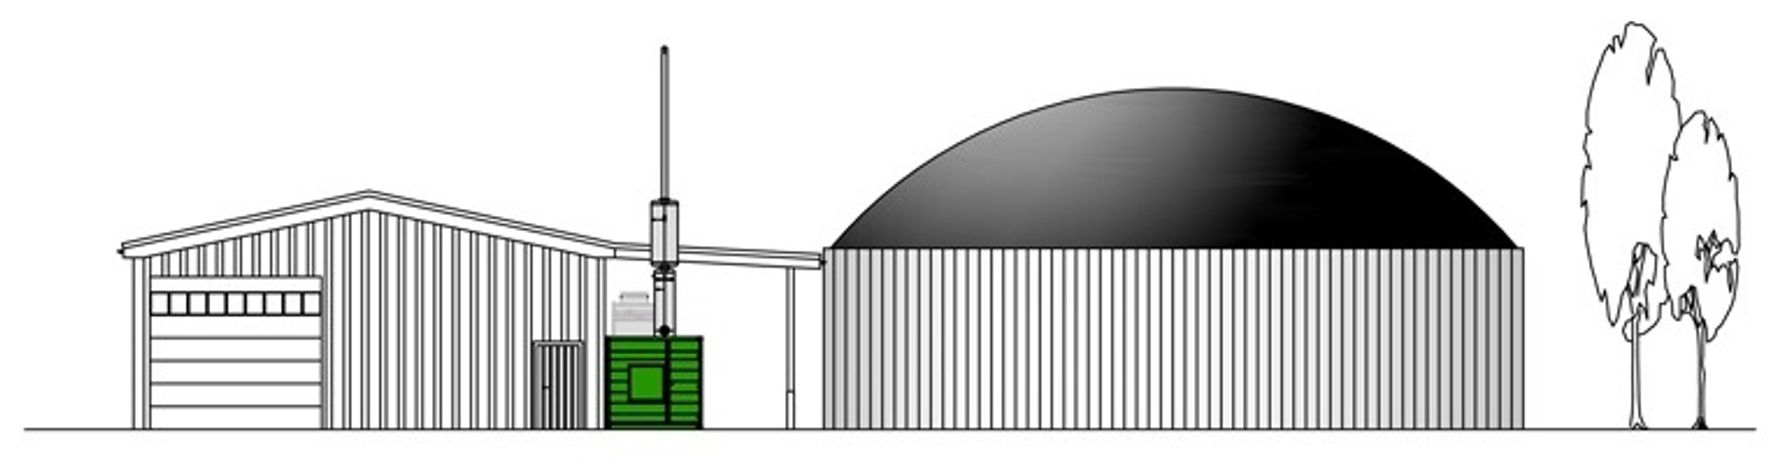 Cofermentation Biogas Plant-1